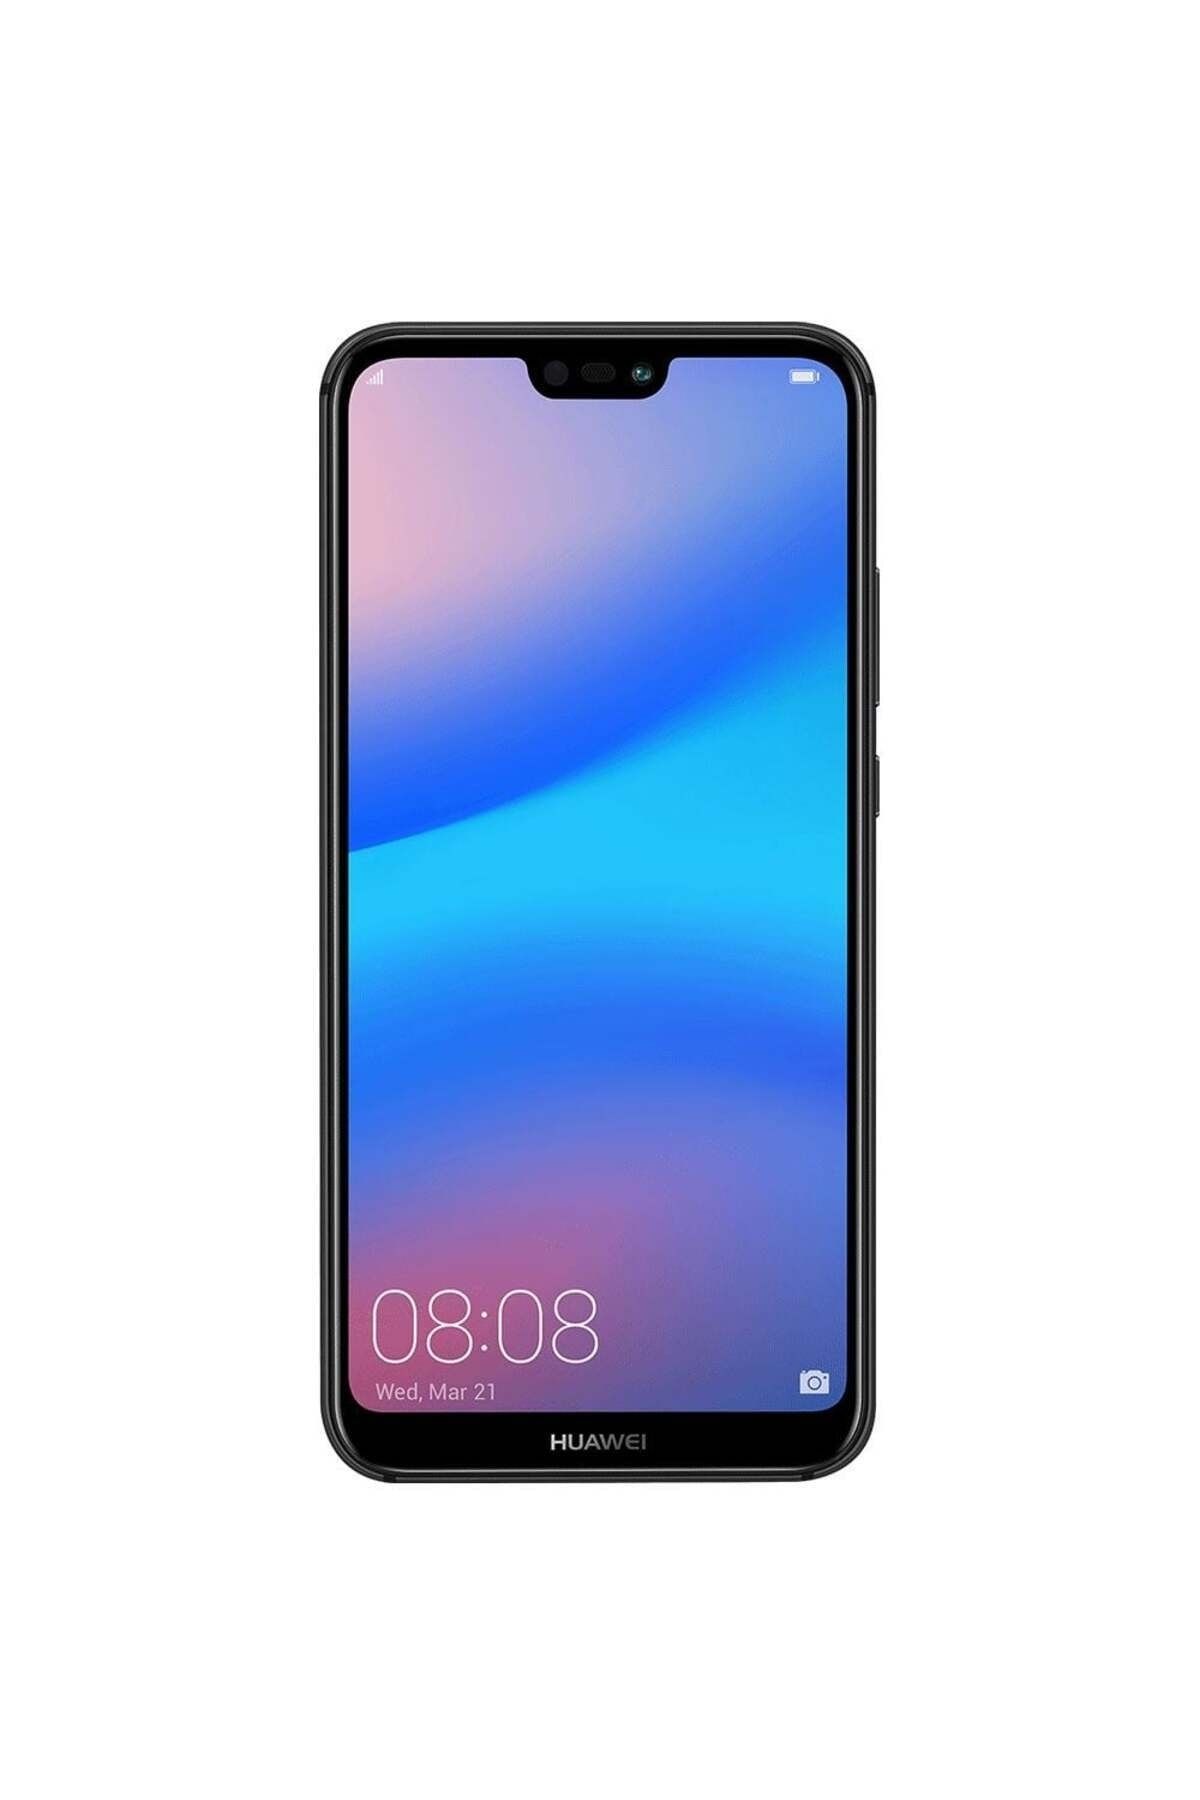 Huawei Yenilenmiş Huawei P20 Lite 64 GB (12 Ay Delta Servis Garantili) - B Grade